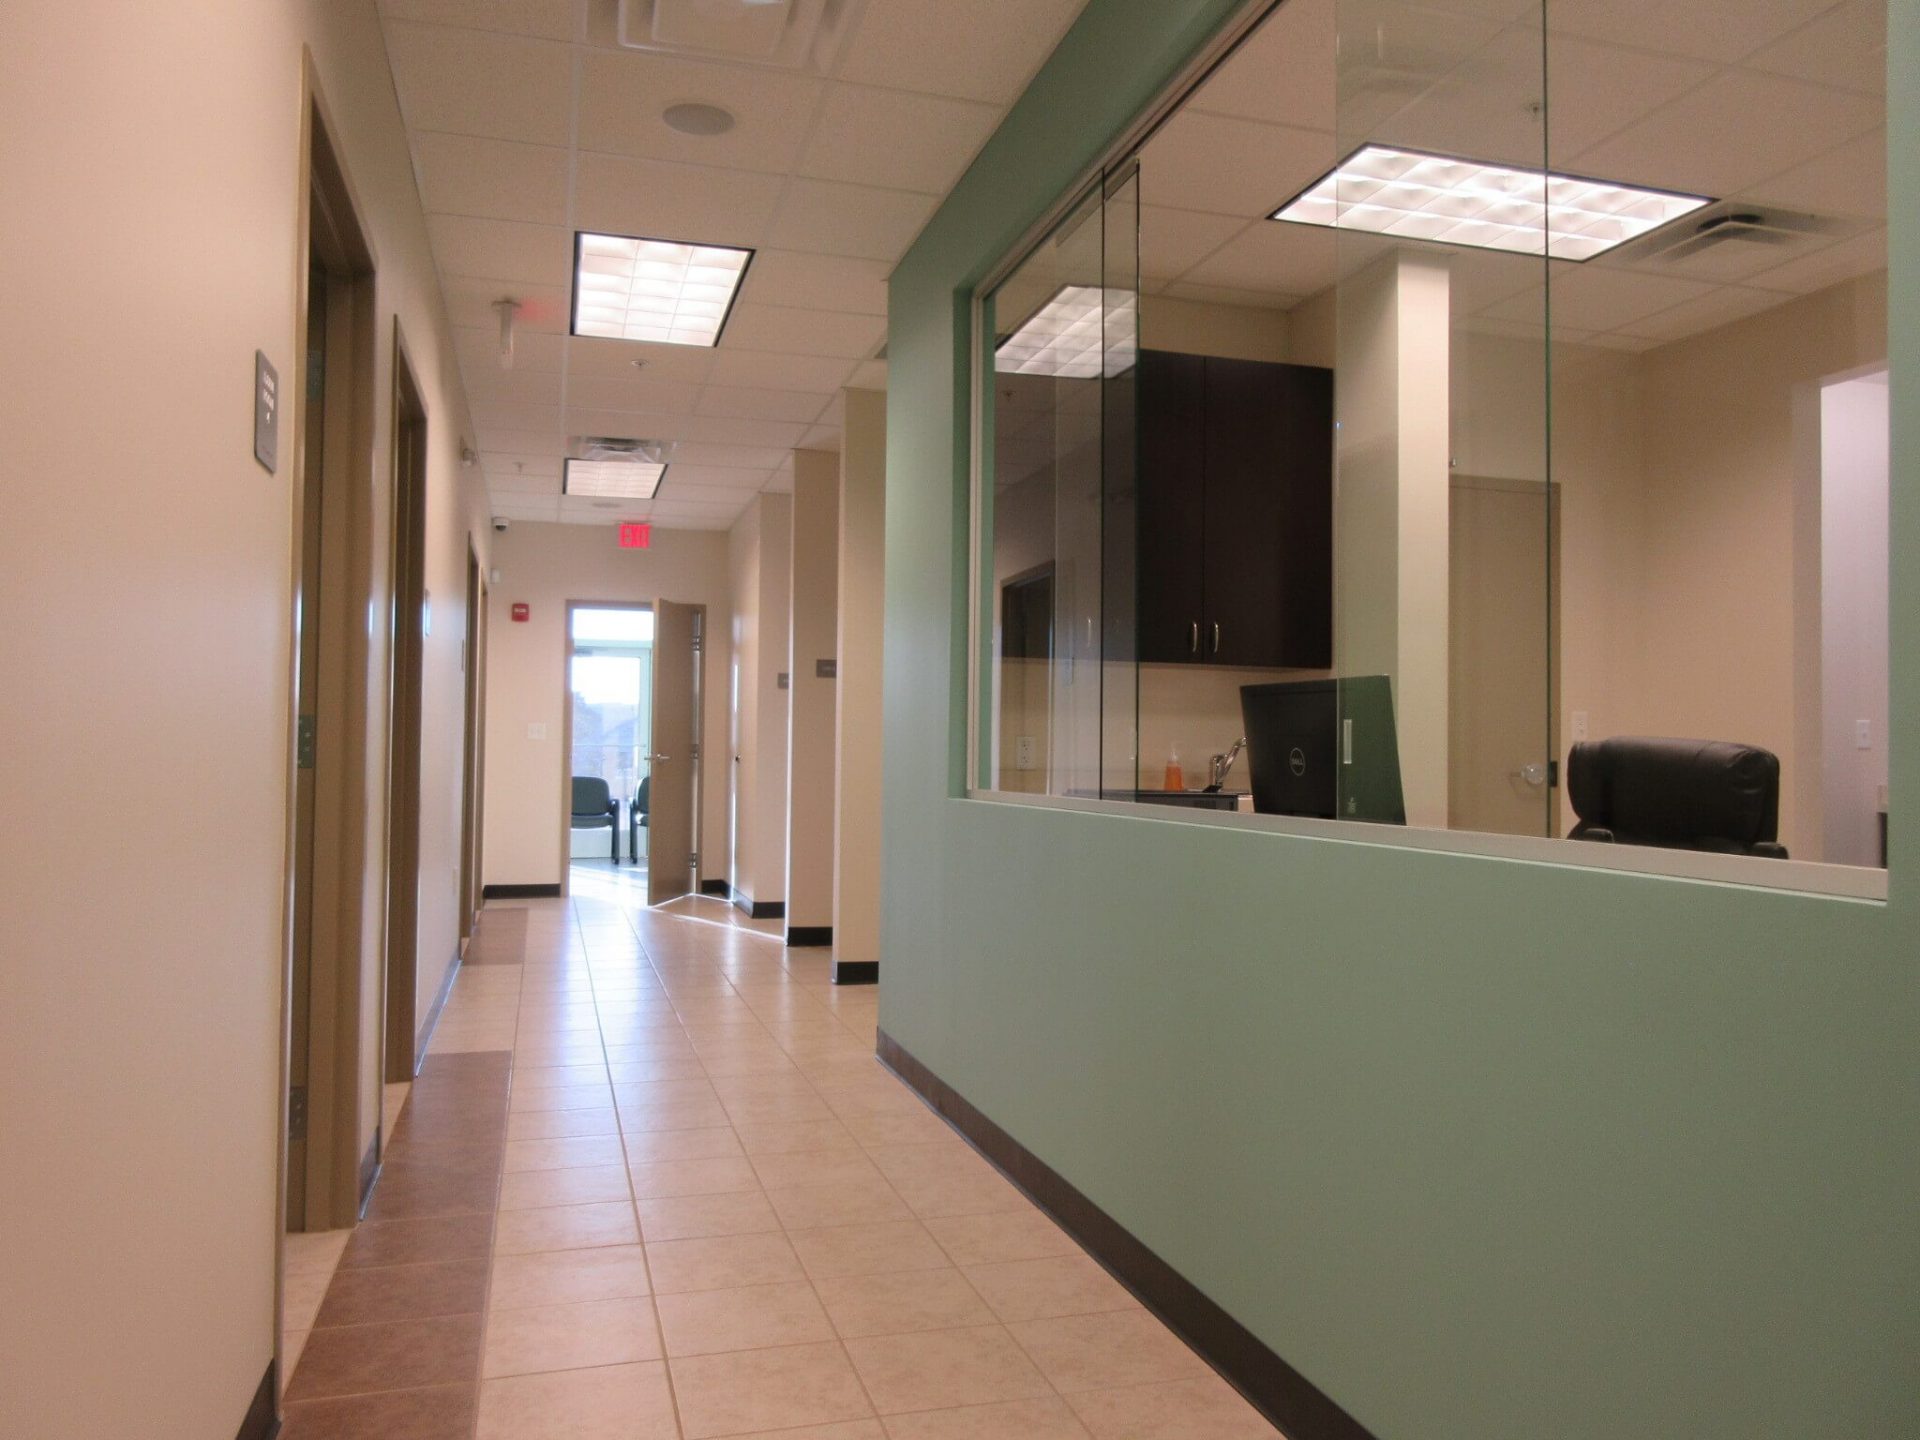 The hallways of Clermont Urgent Care